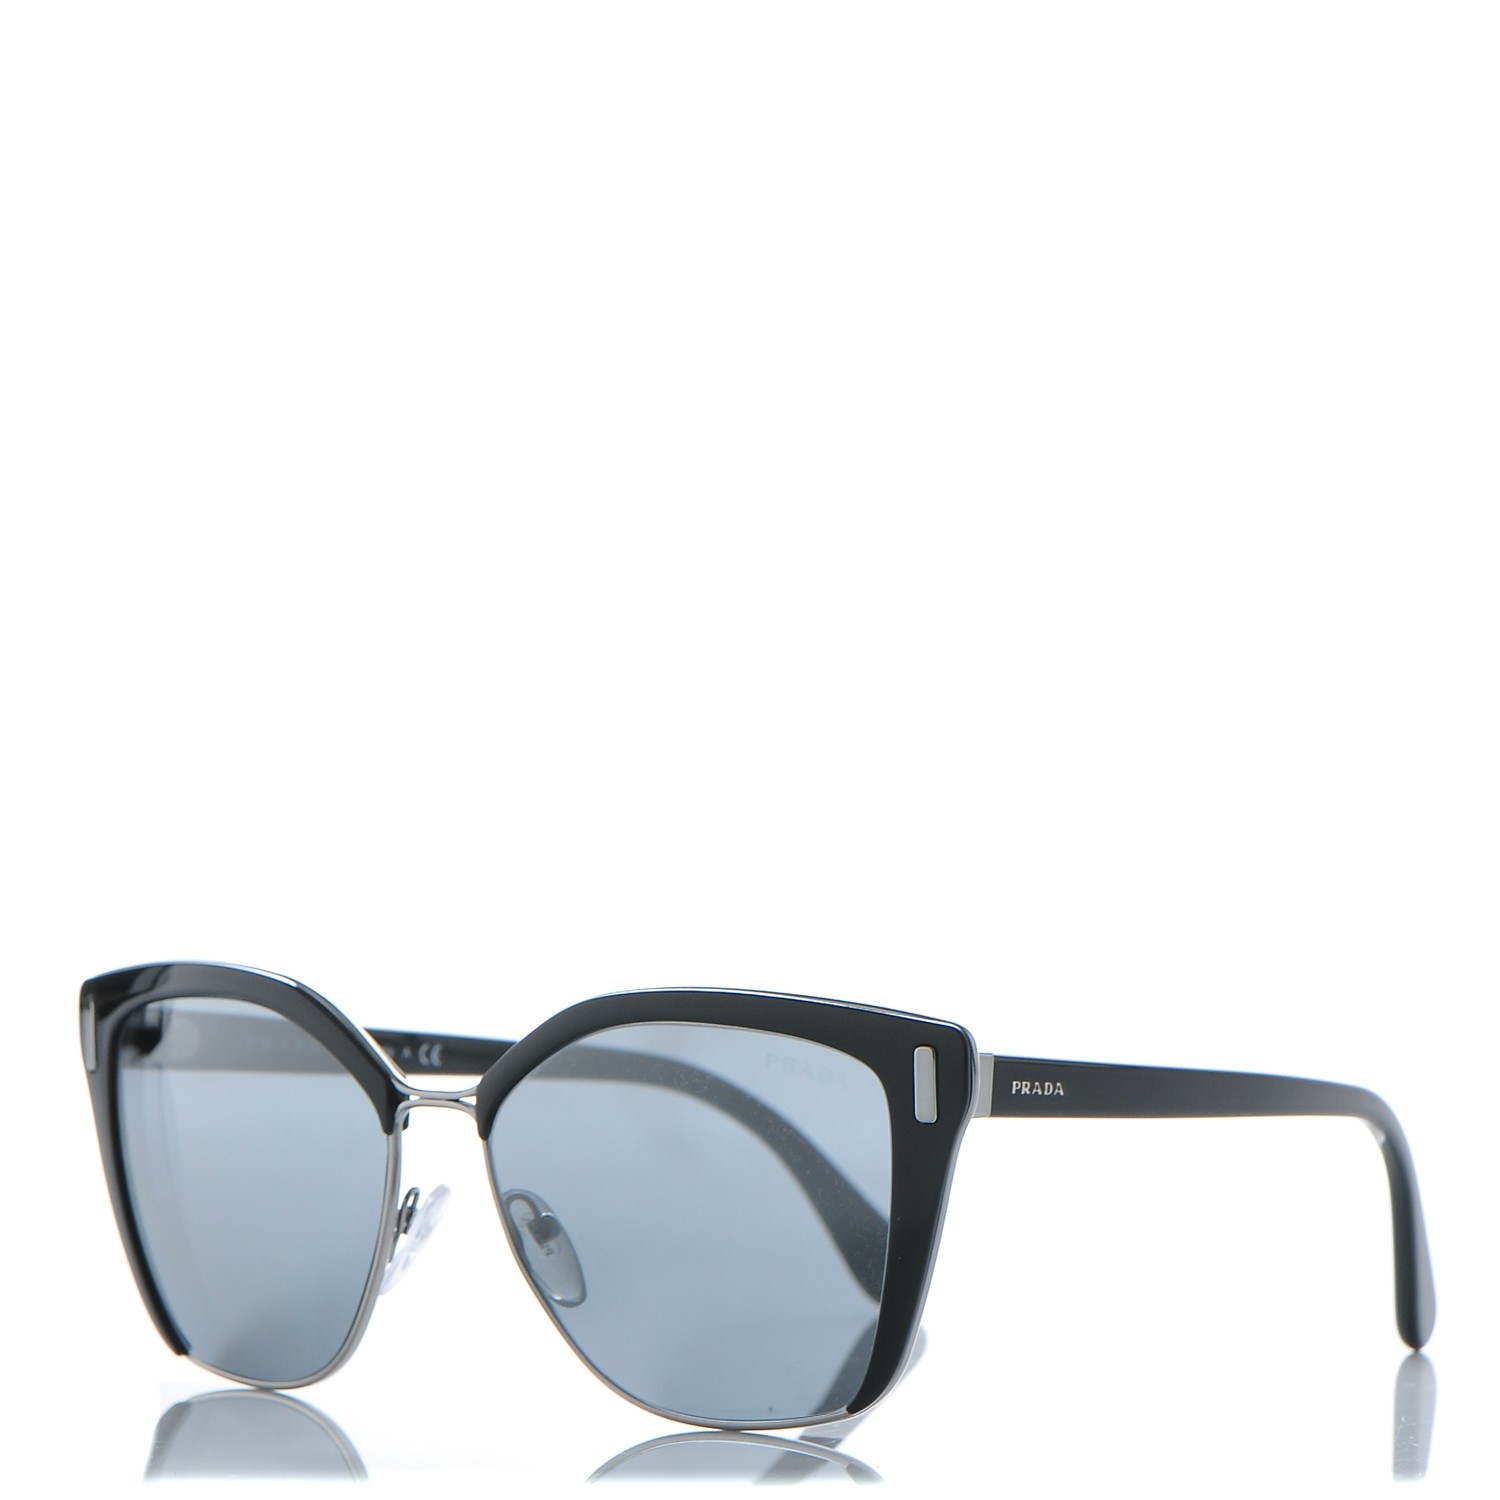 PRADA Sunglasses SPR 56T Black | 184280 